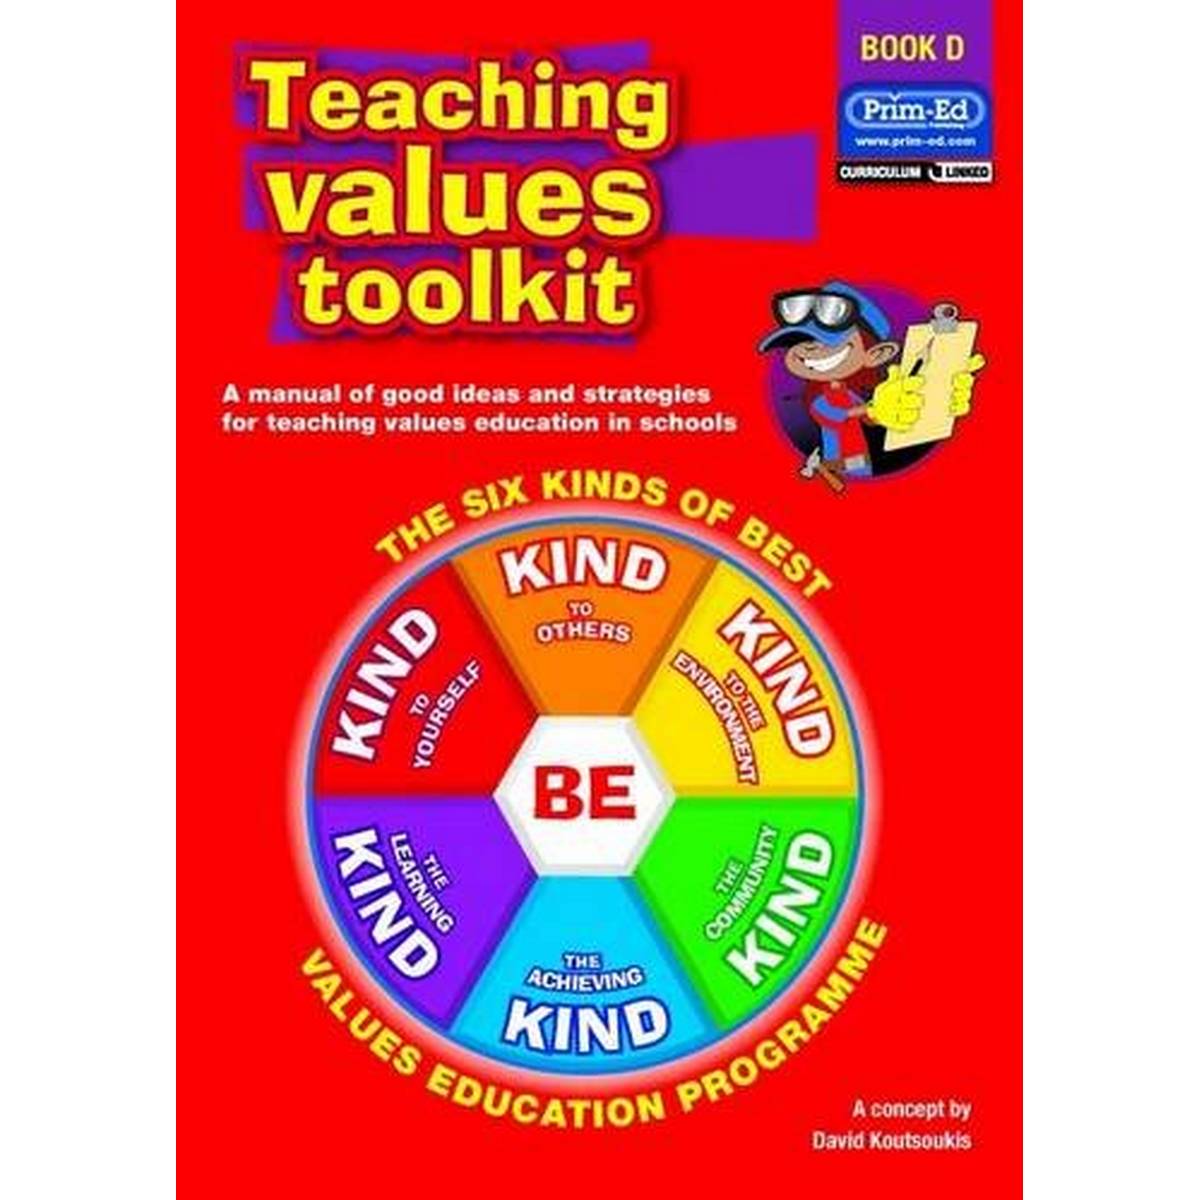 Teaching Values Toolkit Book D